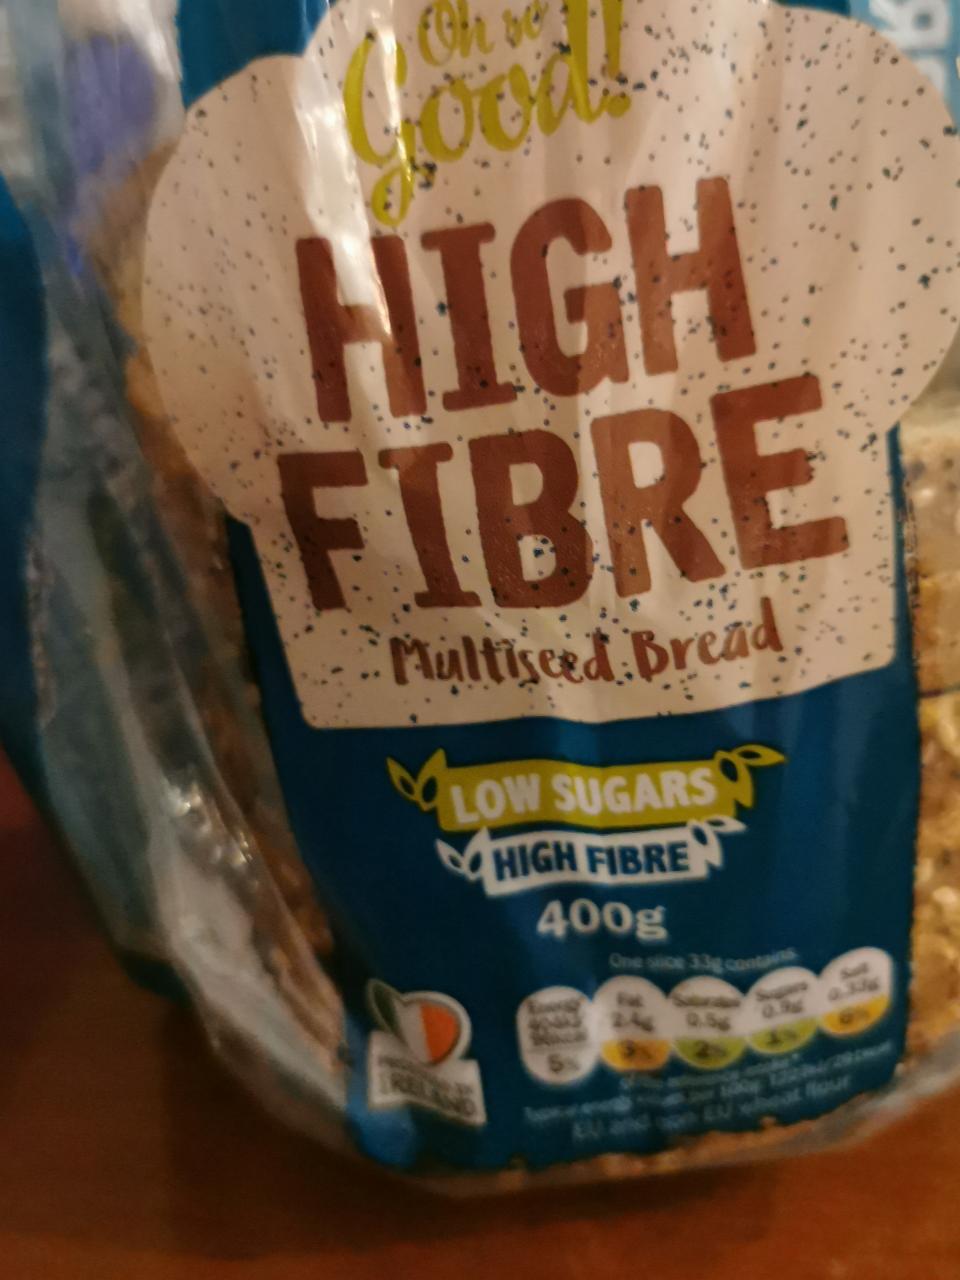 Fotografie - high fibre multiseed bread